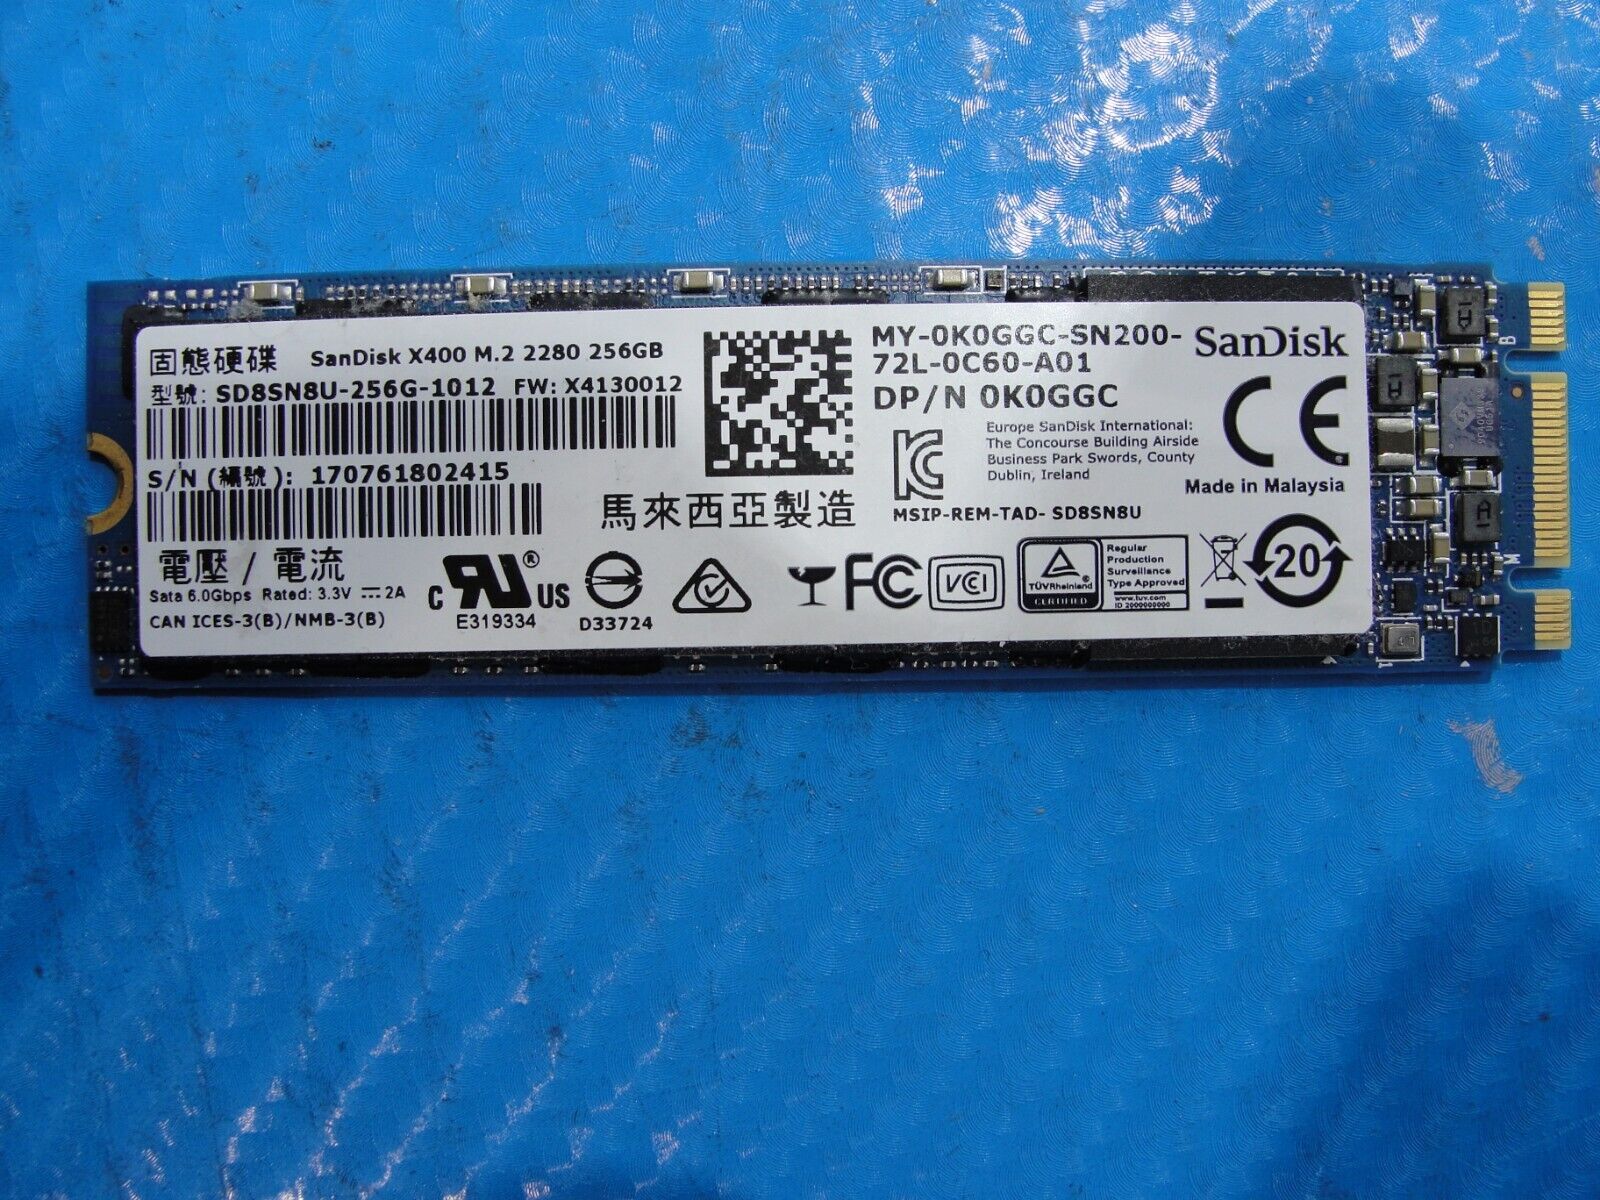 Dell 7567 SanDisk X400 SATA M.2 256Gb Ssd Solid State Drive SD8SN8U-256G-1012